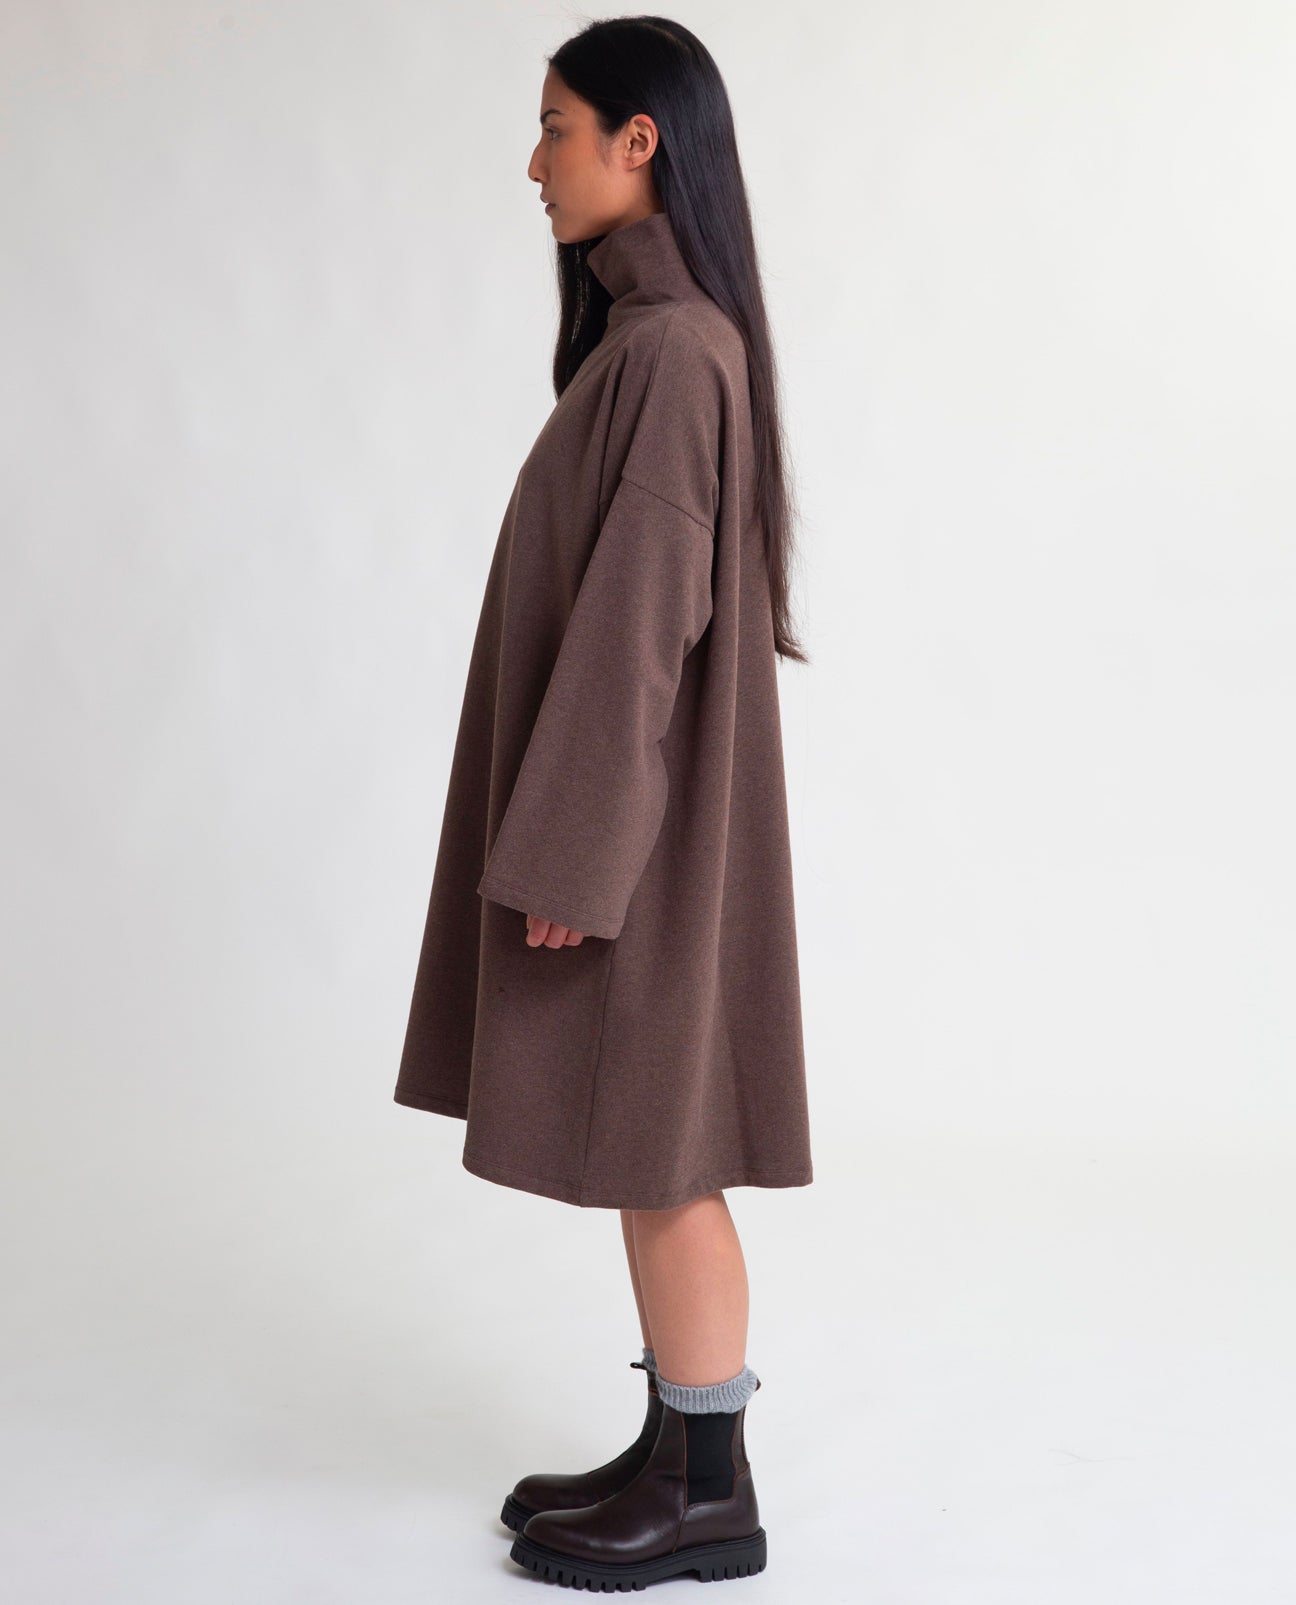 Xena Organic Cotton Dress In Brown Marl